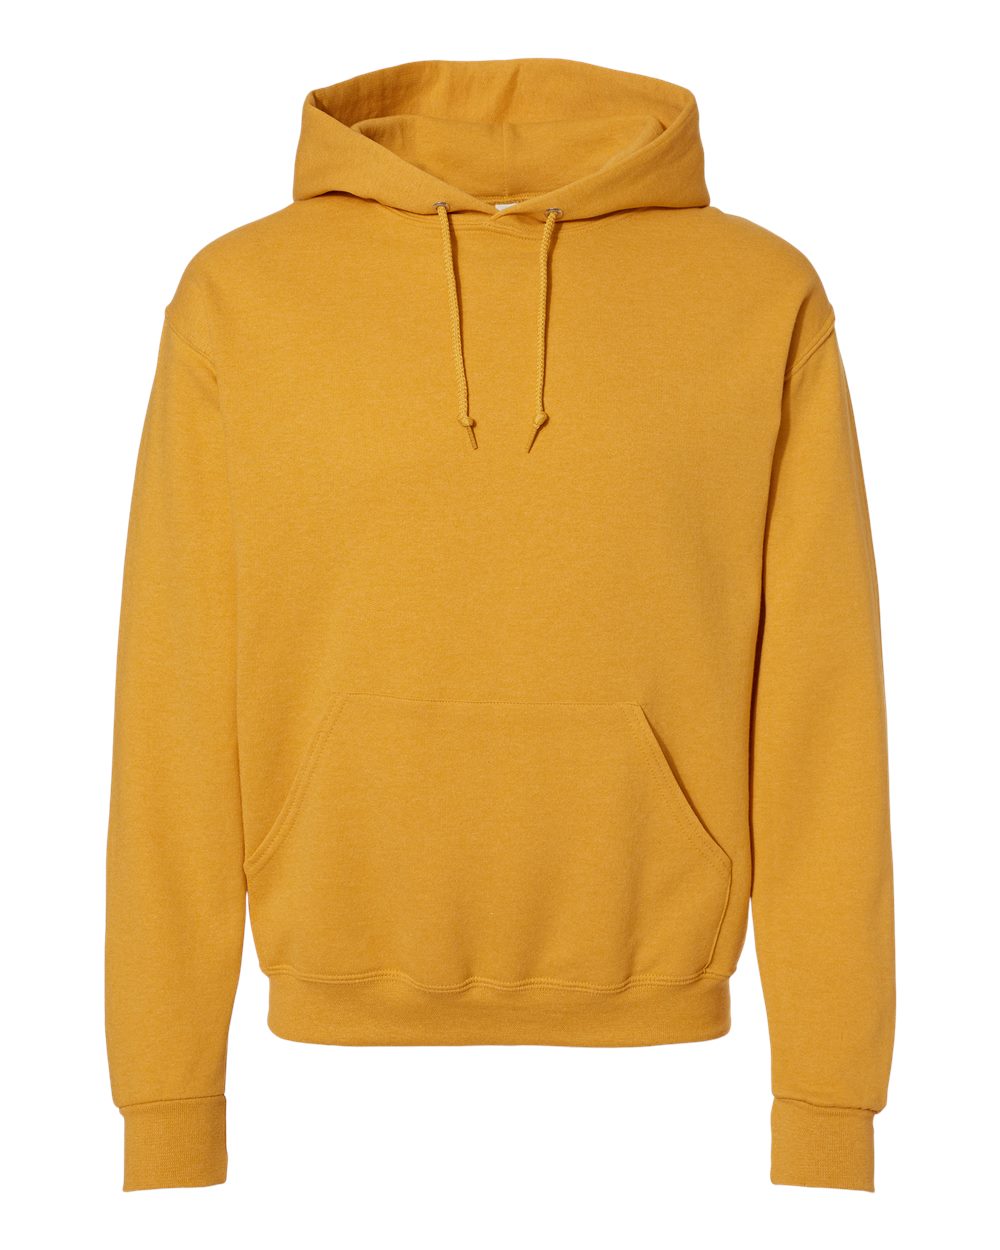 Jerzees 996 8 oz. NuBlend50/50 Pullover Hood $13.77 - Sweatshirts